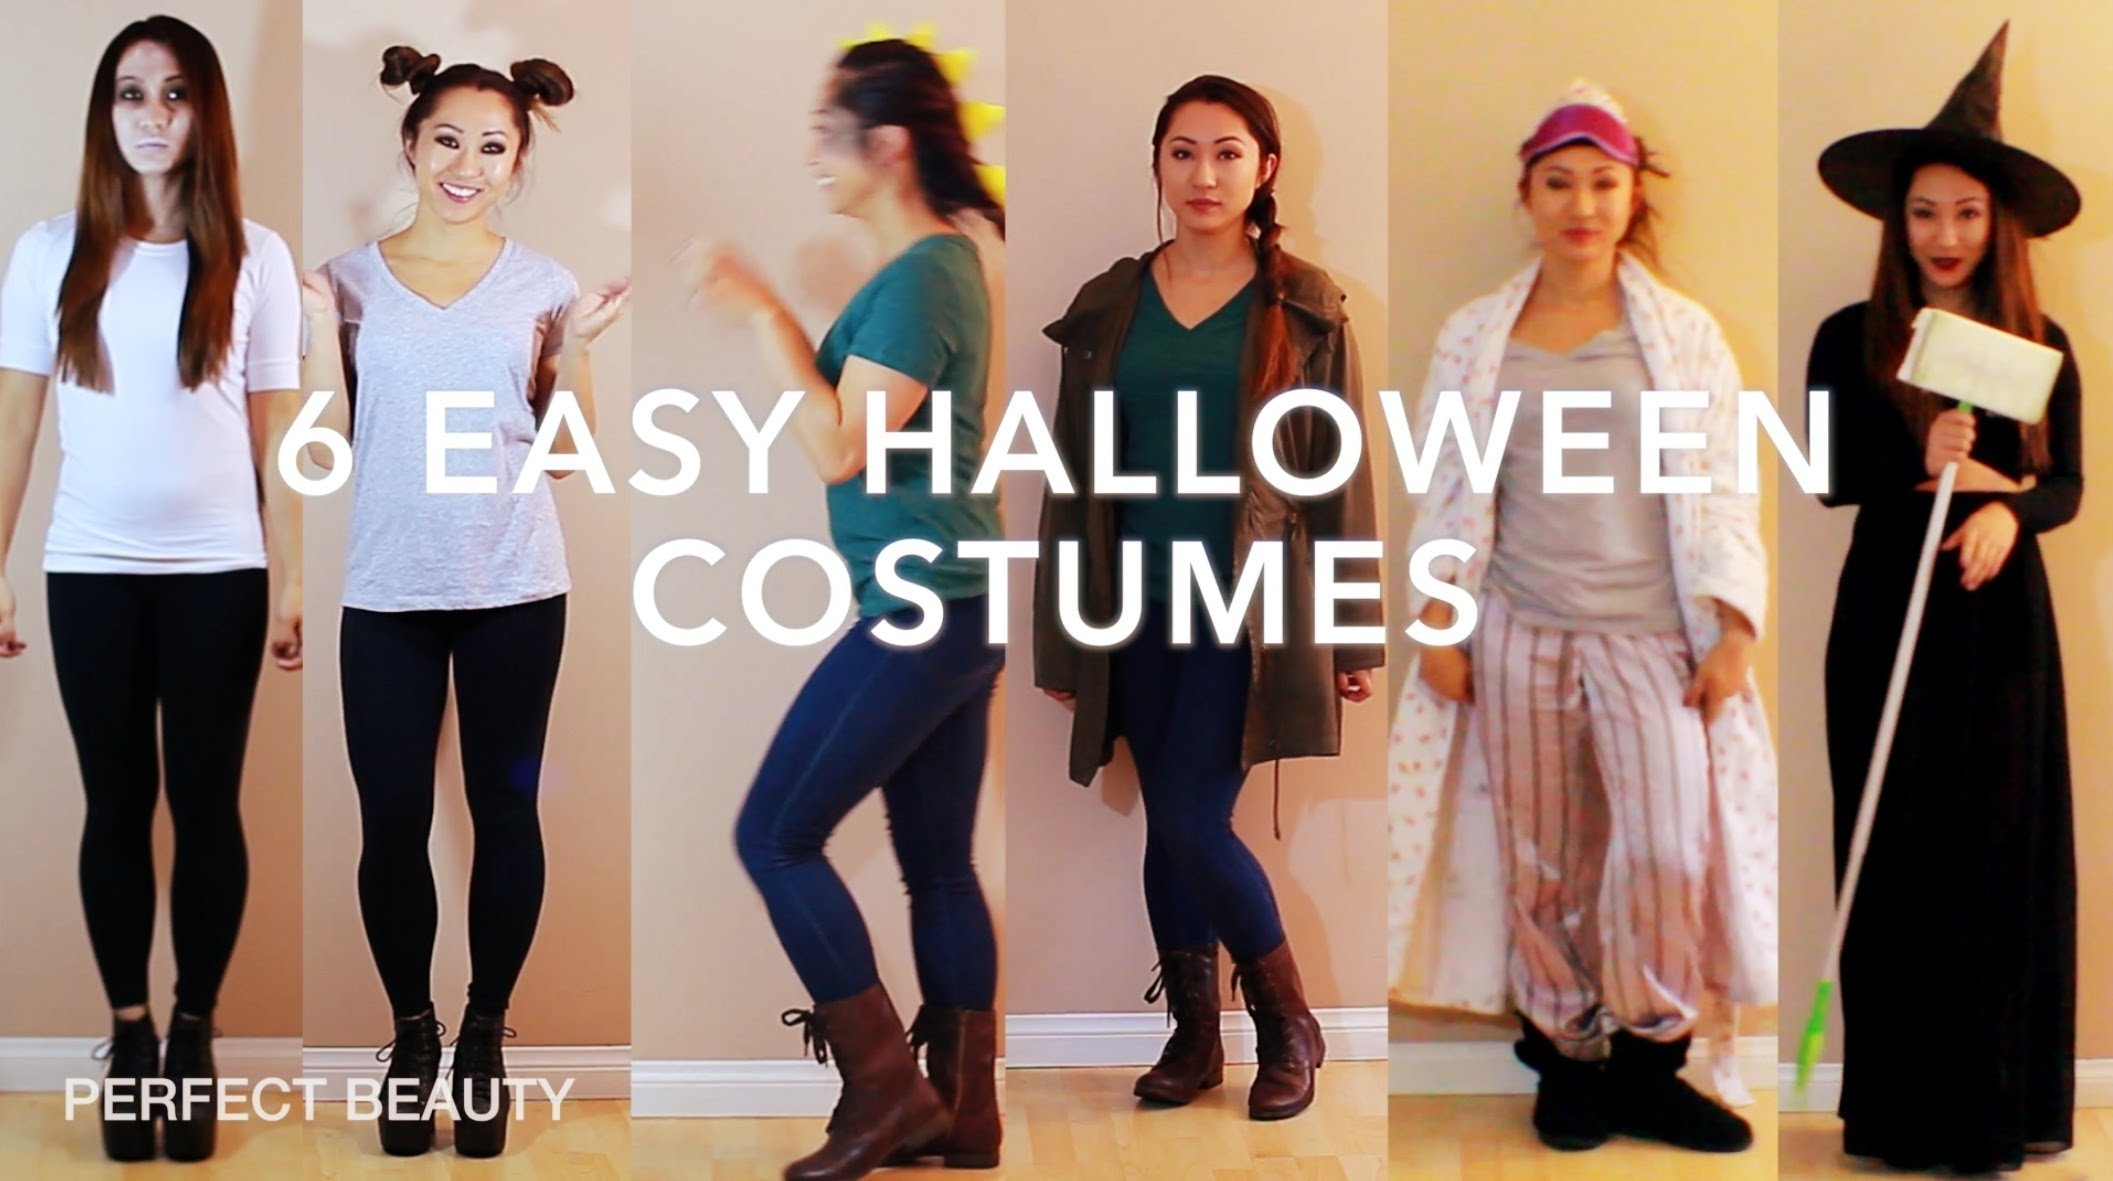 10 Ideal Last Minute Halloween Costumes Ideas last minute diy halloween costume ideas perfect beauty youtube 3 2022